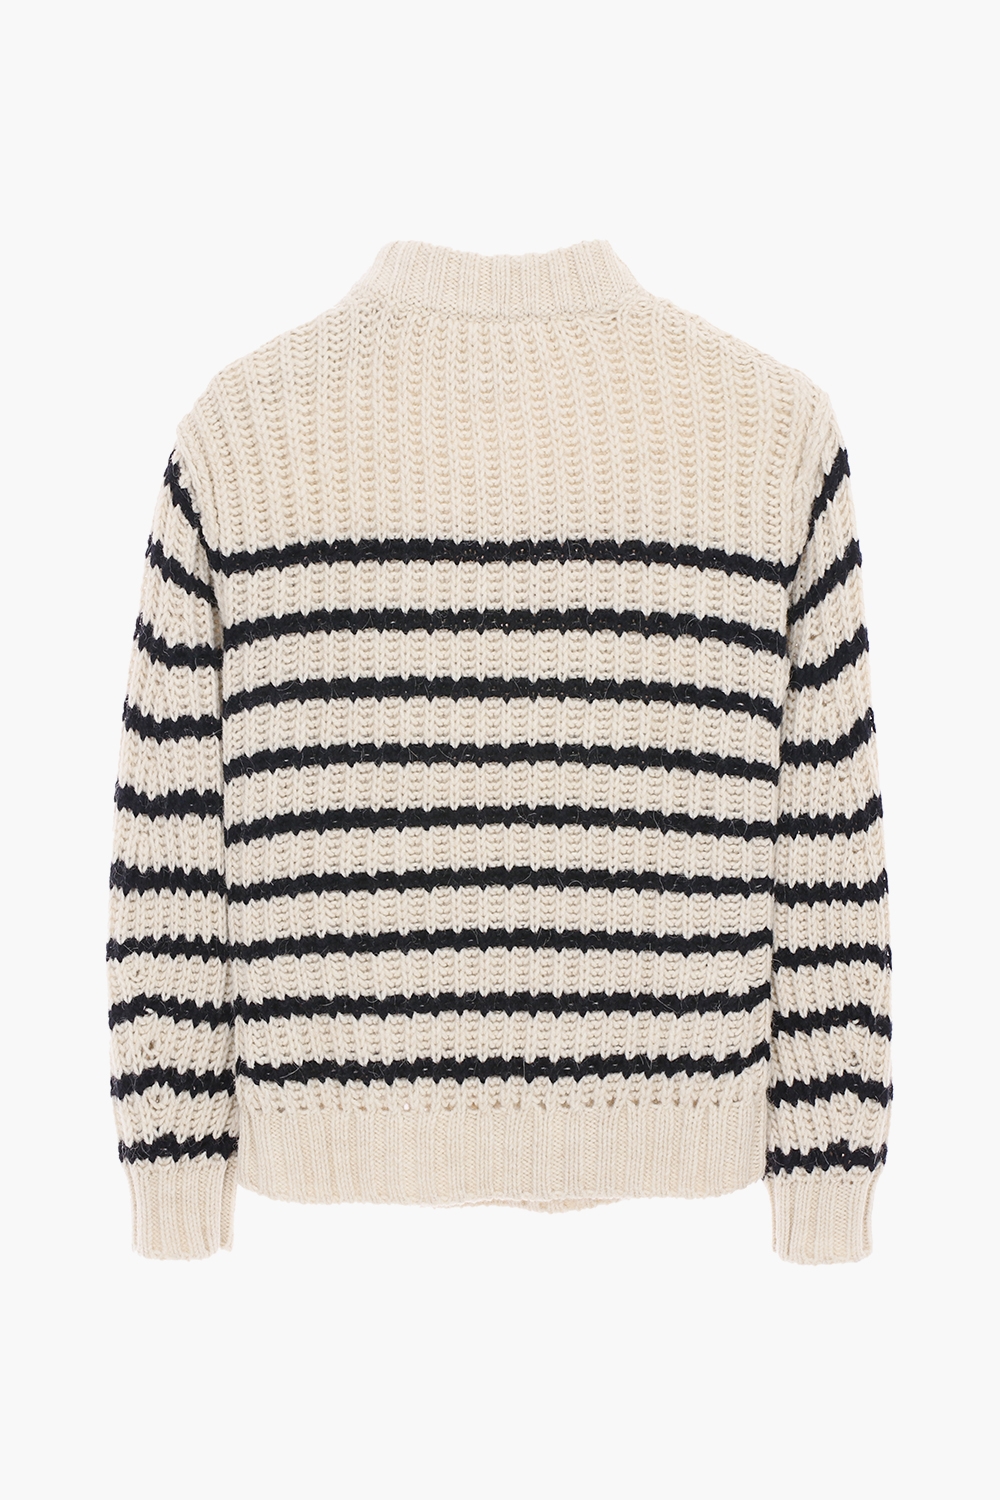 Marlony Sweater